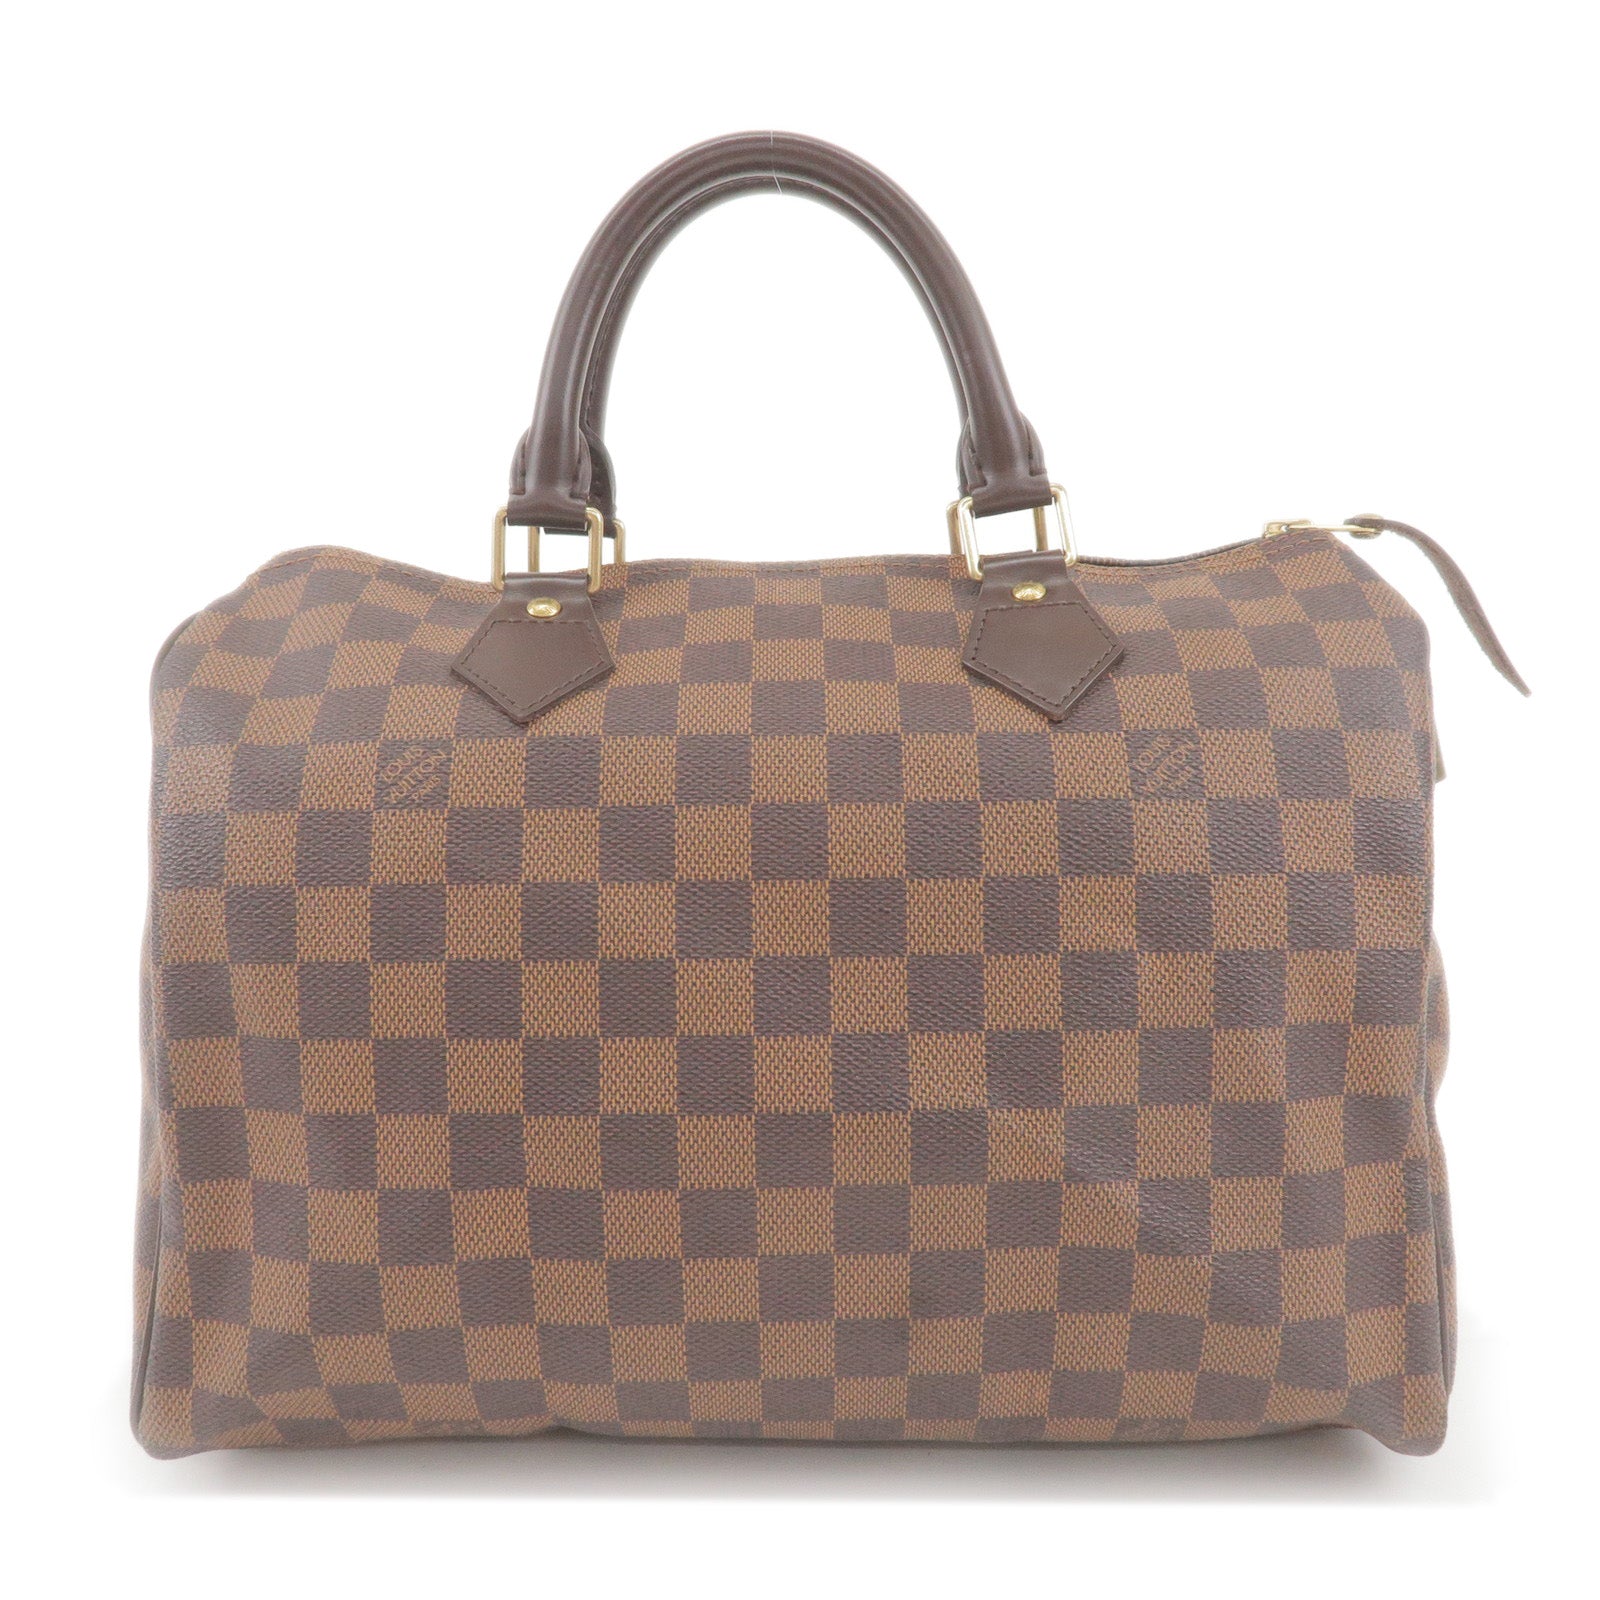 Pre-loved Louis Vuitton Speedy 25 Damier Azur Bag